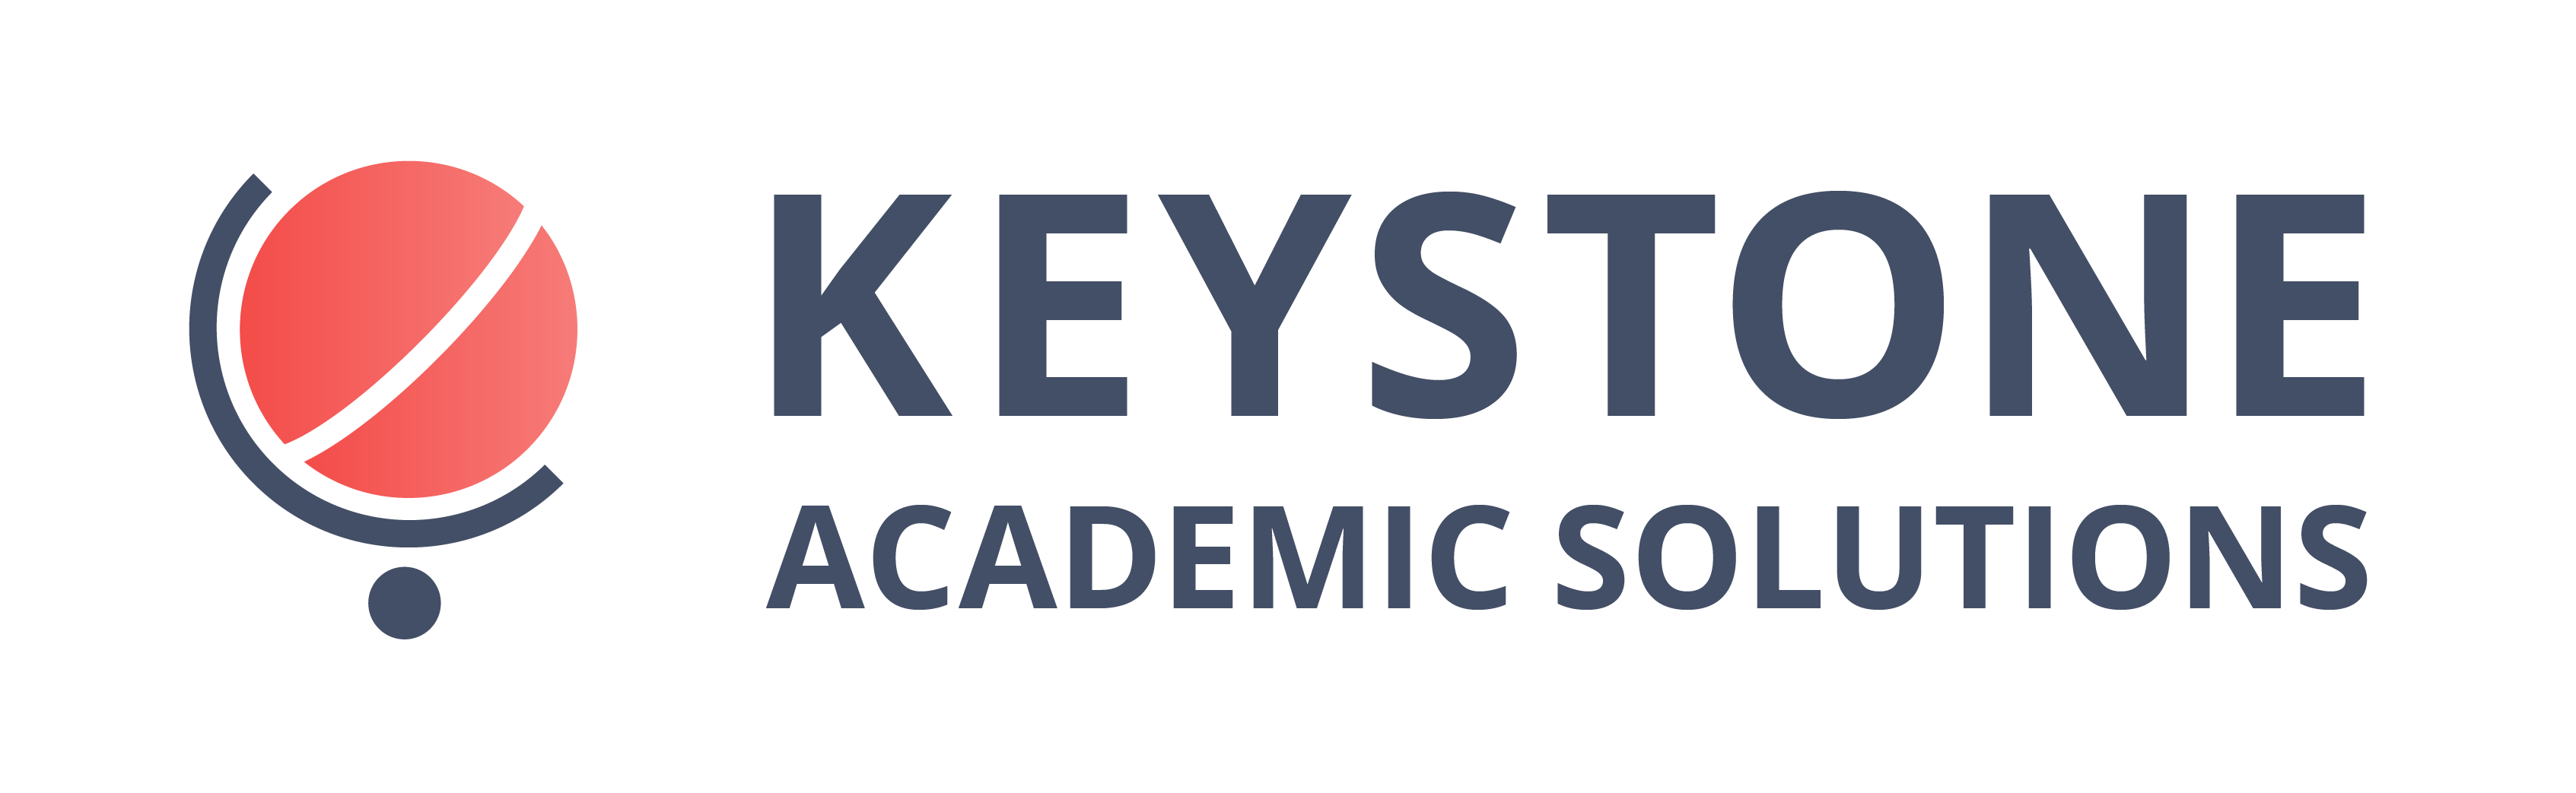 Keystone_Logos-05